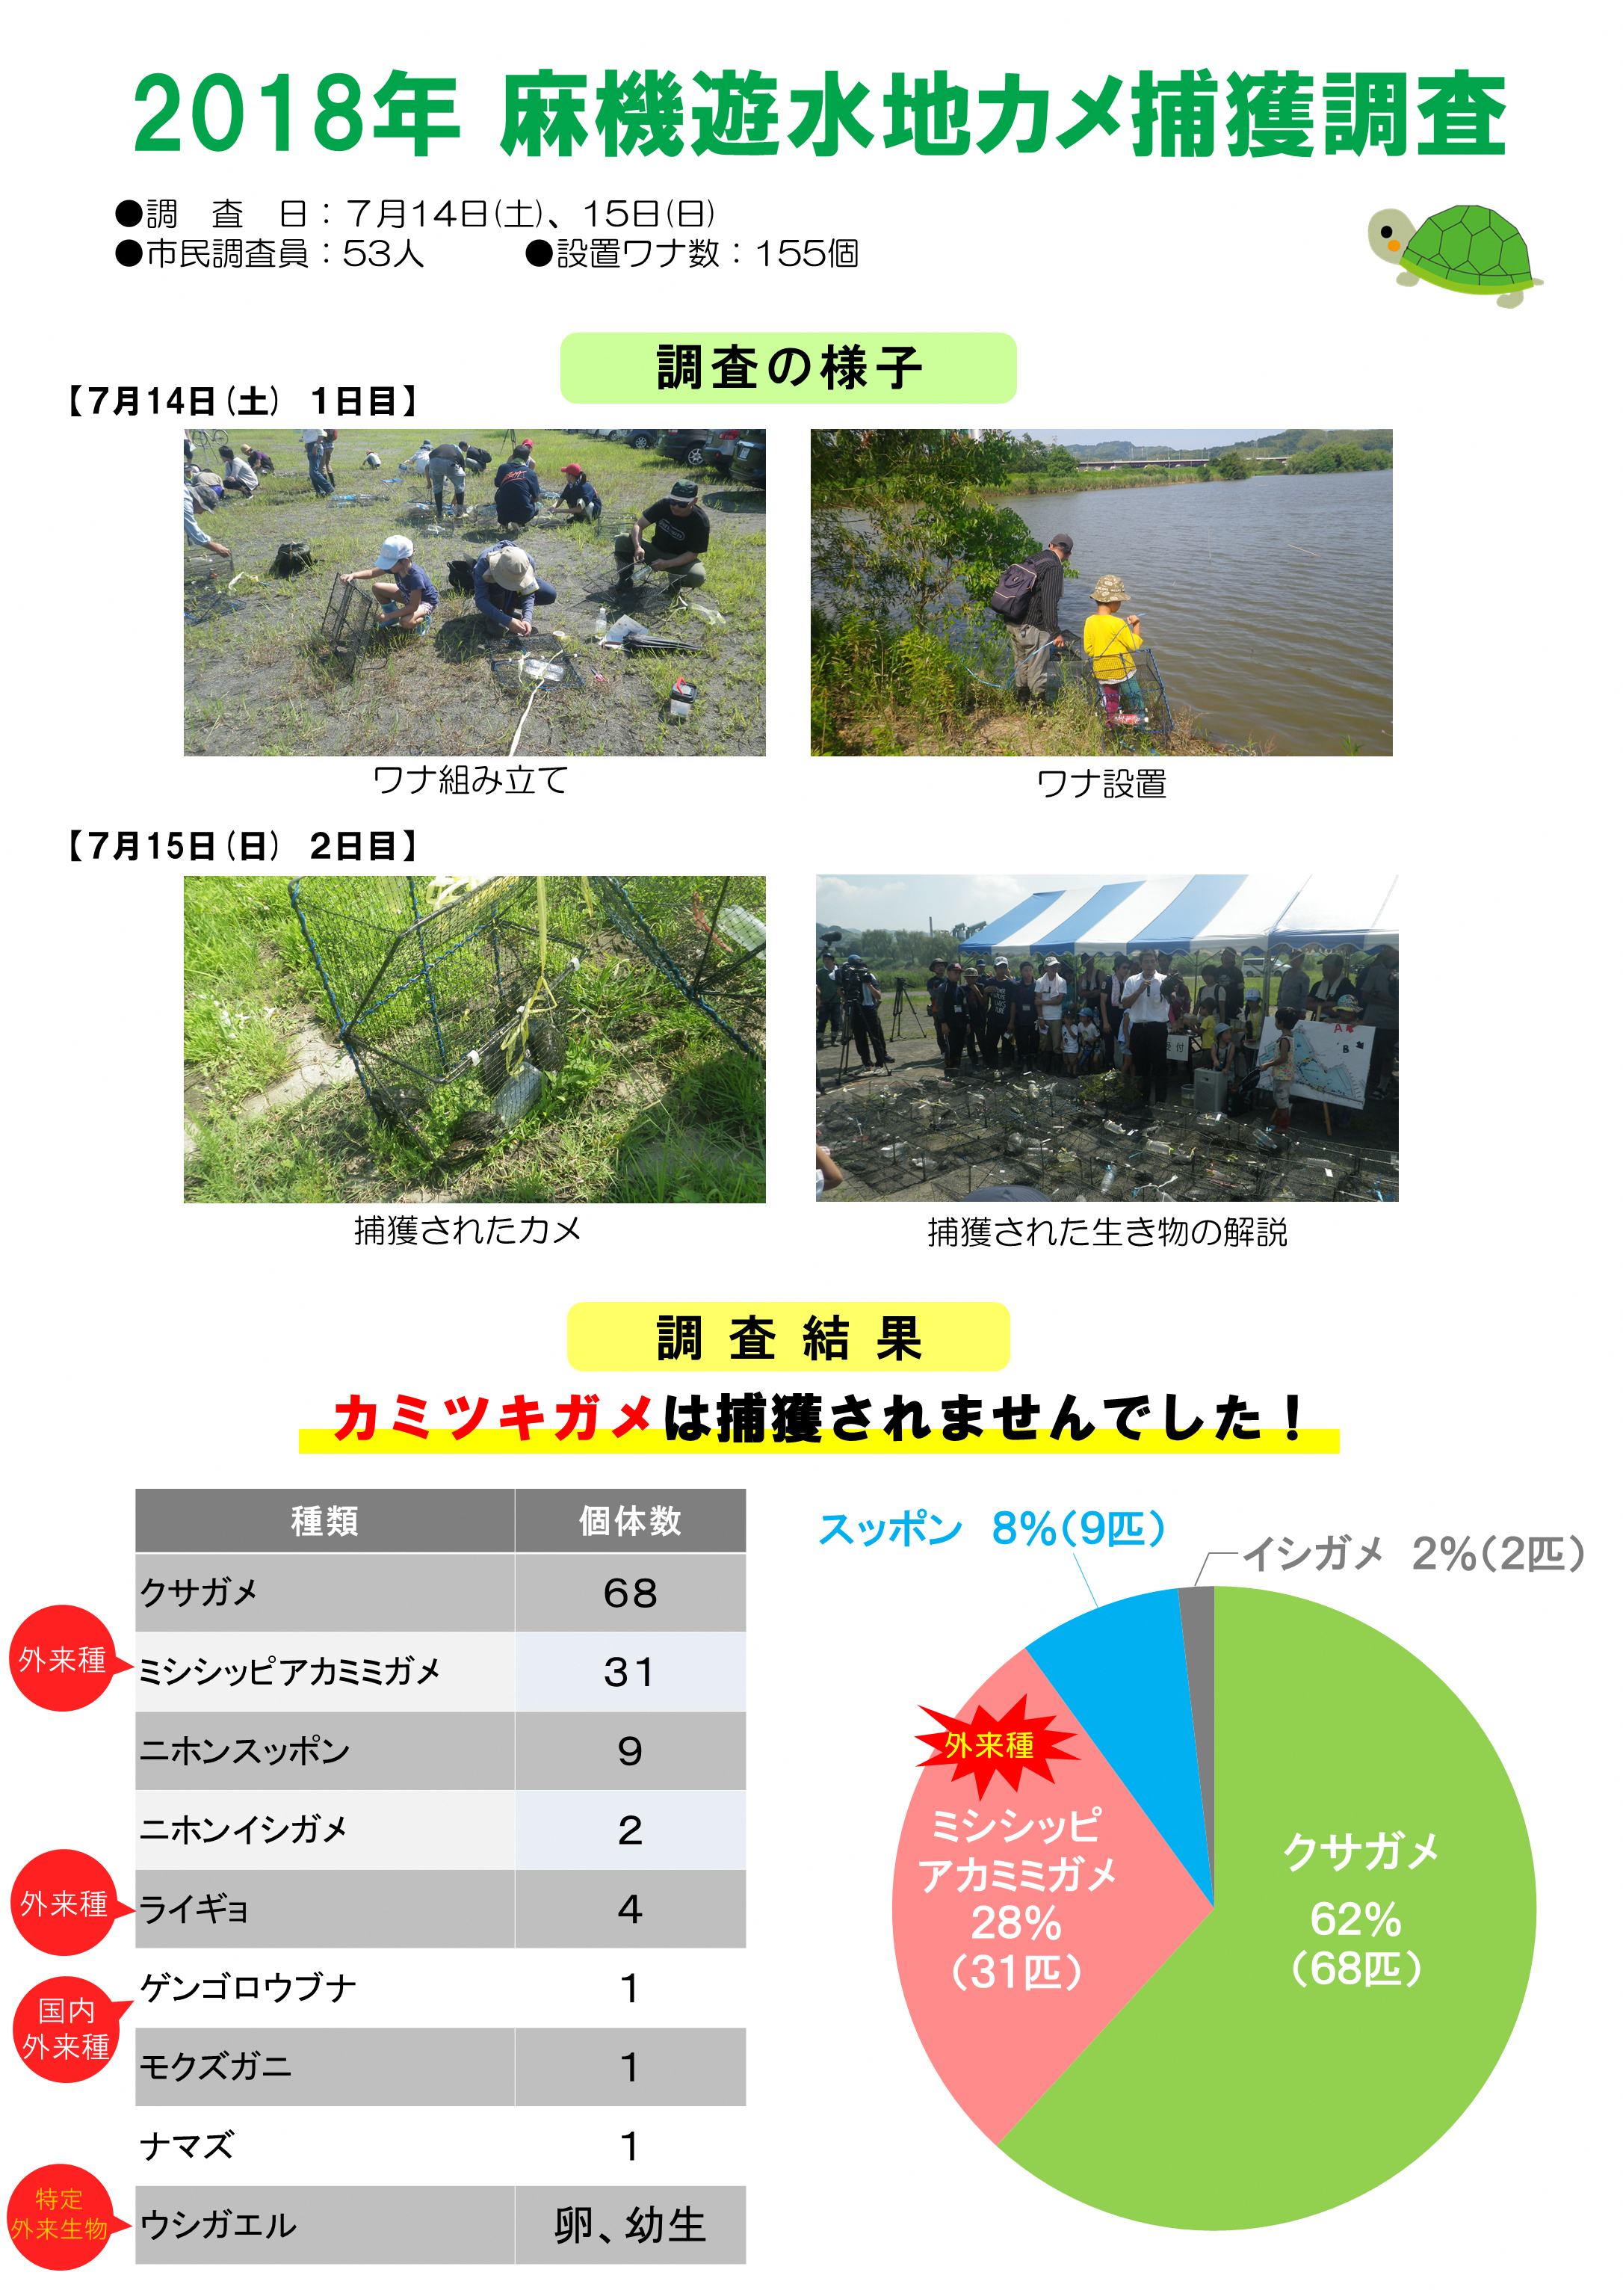 http://www.shizutan.jp/learning/2018/07/31/images/%E8%AA%BF%E6%9F%BB%E5%A0%B1%E5%91%8A%EF%BC%91.png